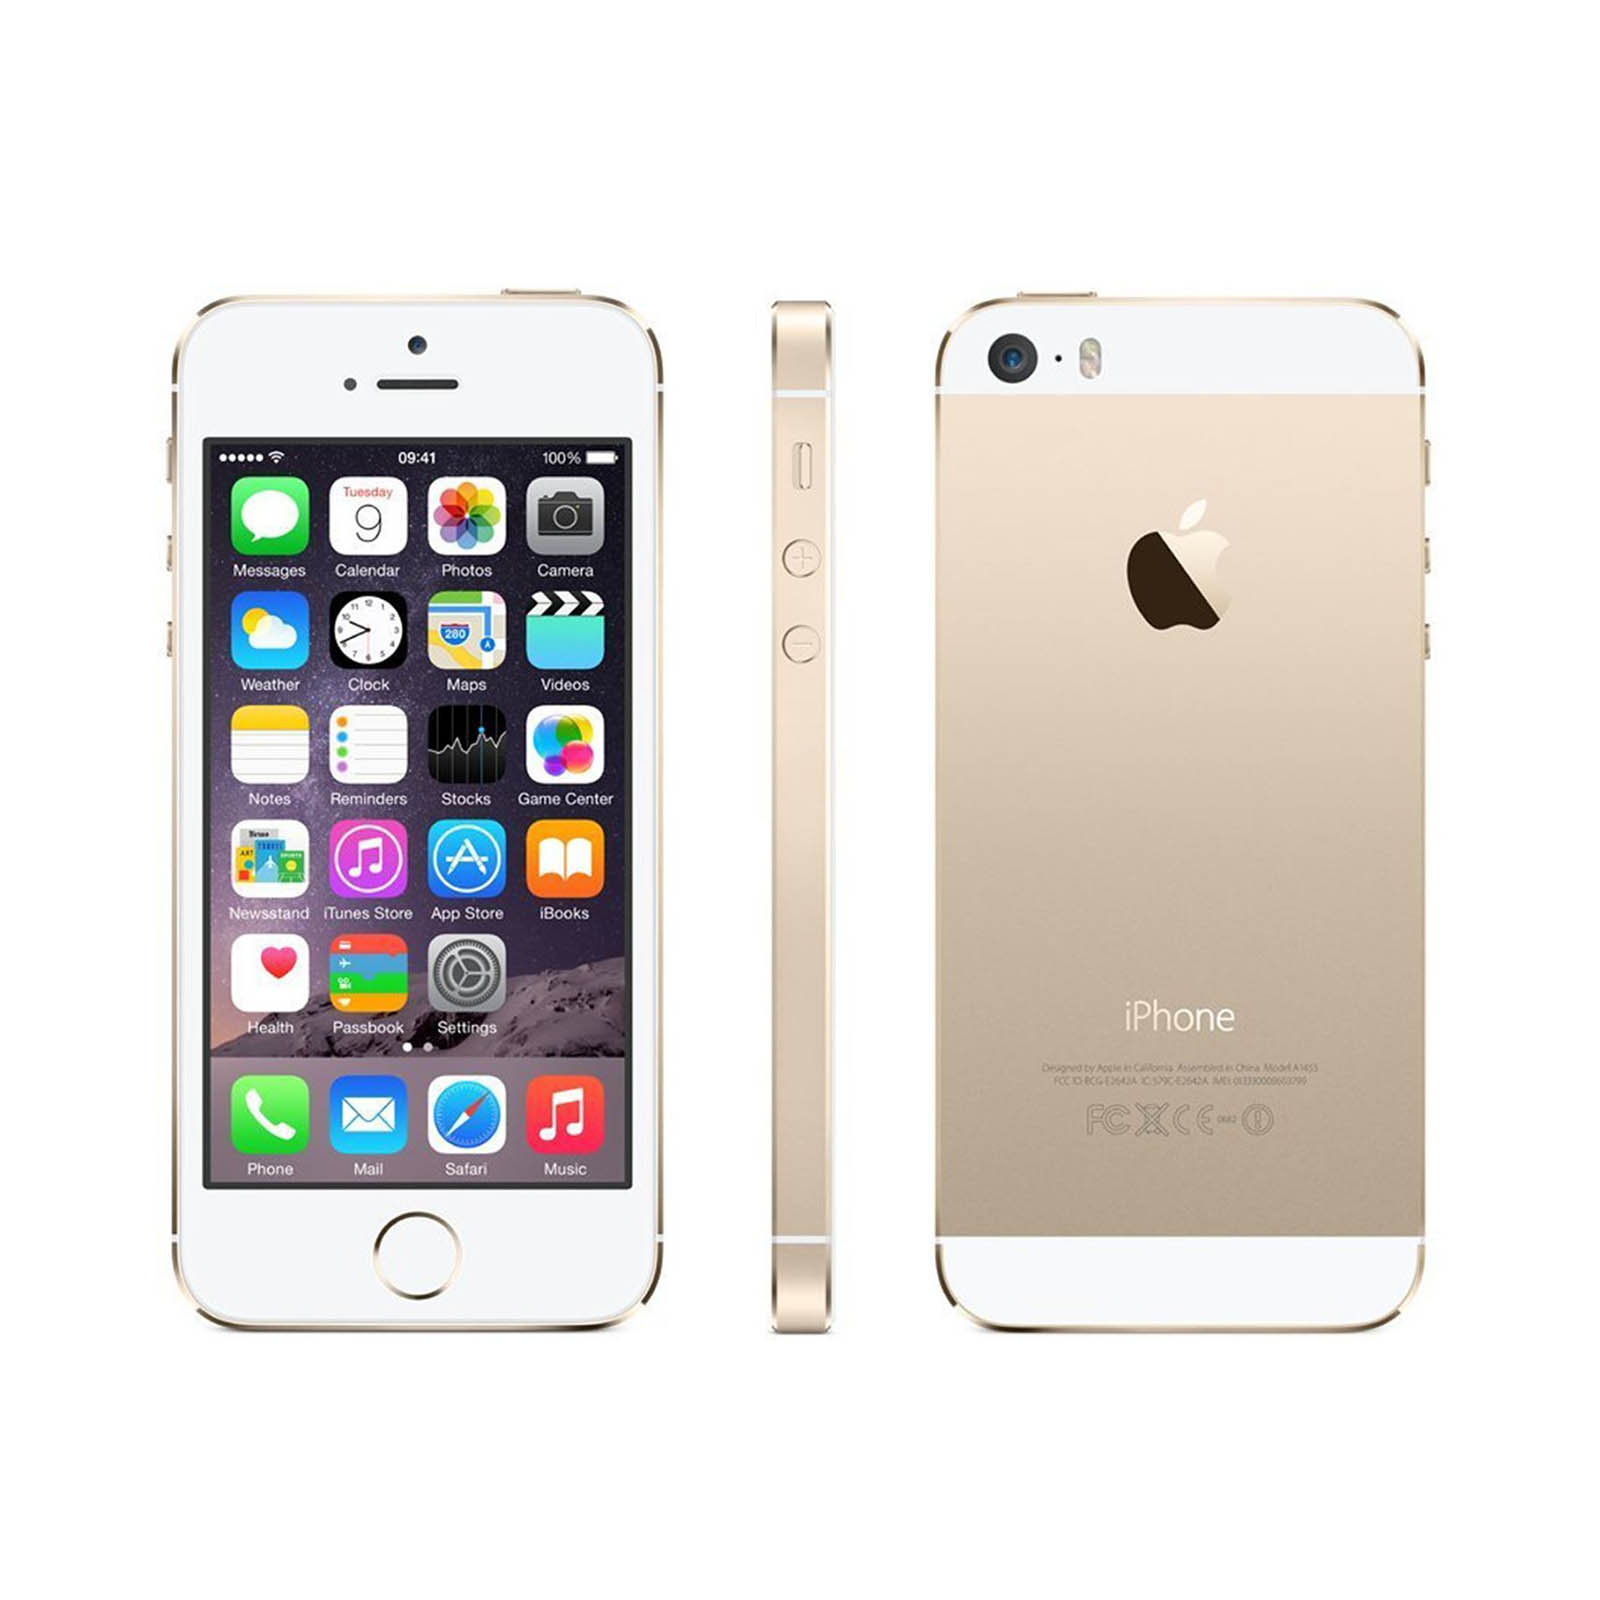 Iphone 5 сколько. Apple iphone 5 16gb. Apple iphone 5s 32gb. Apple iphone 5s 16gb Gold. Apple iphone 5s 64gb.